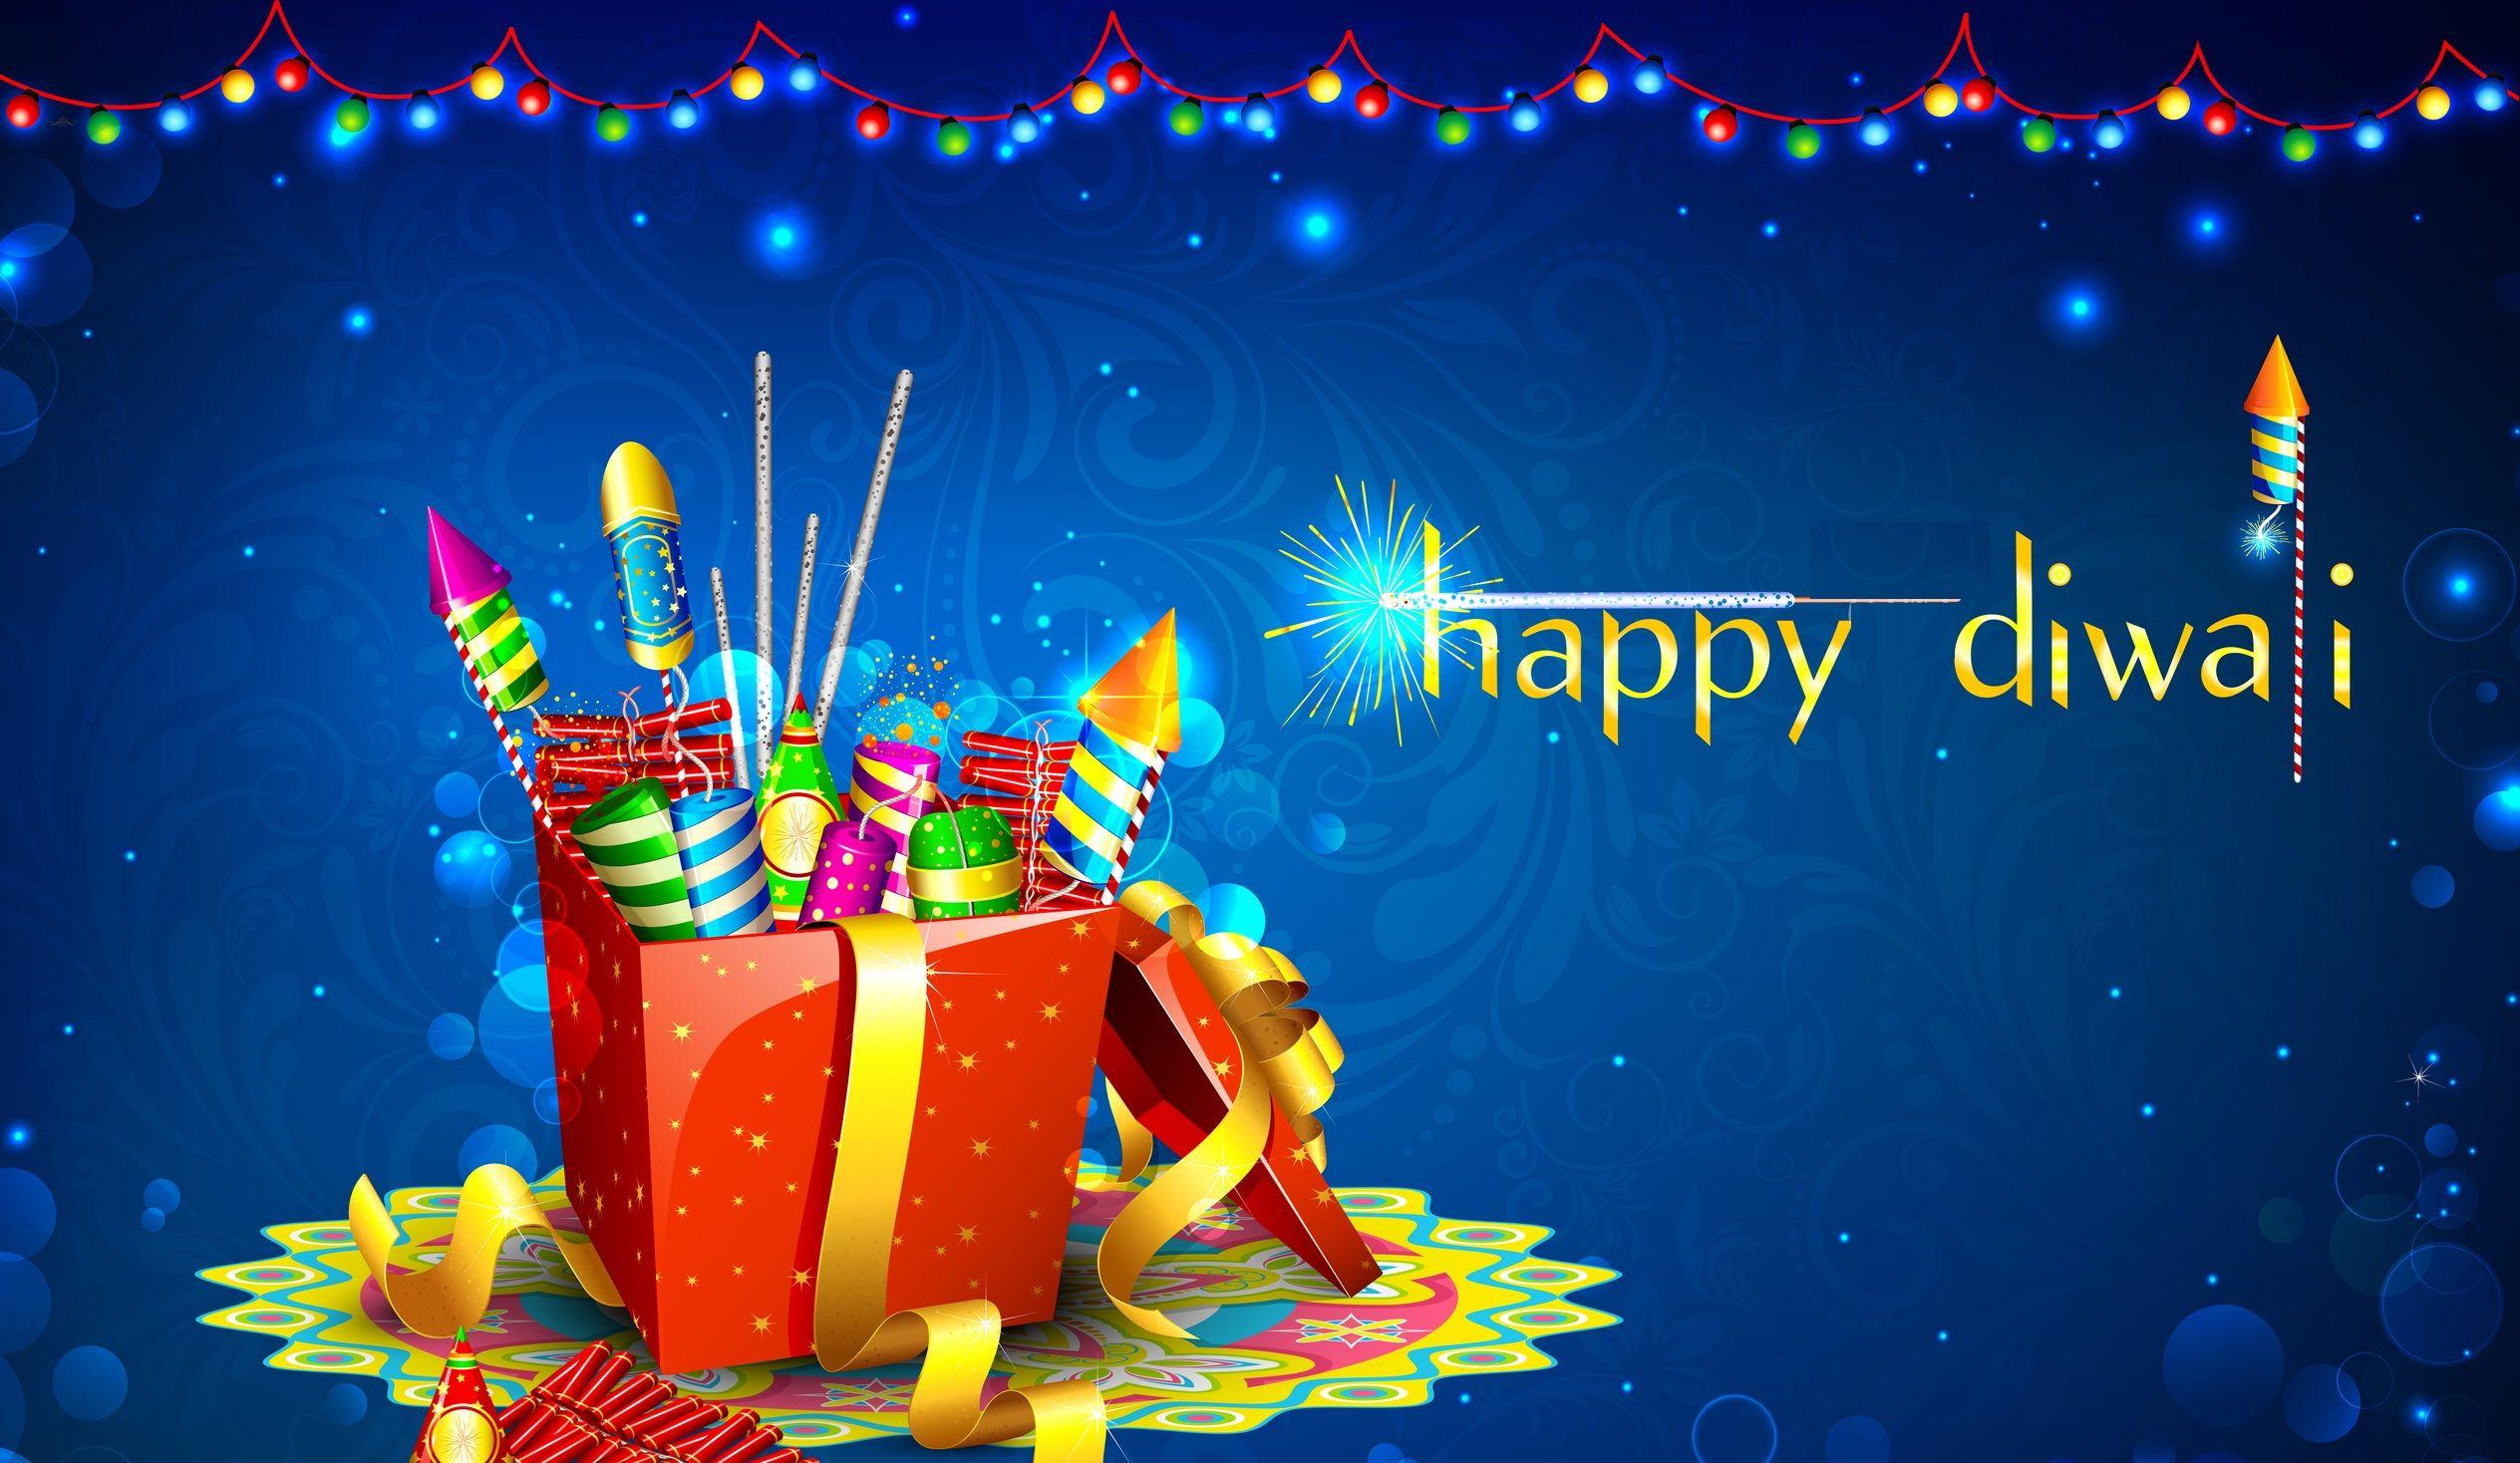 Happy Diwali 2016 Image. Digital Marketing Services, SMO